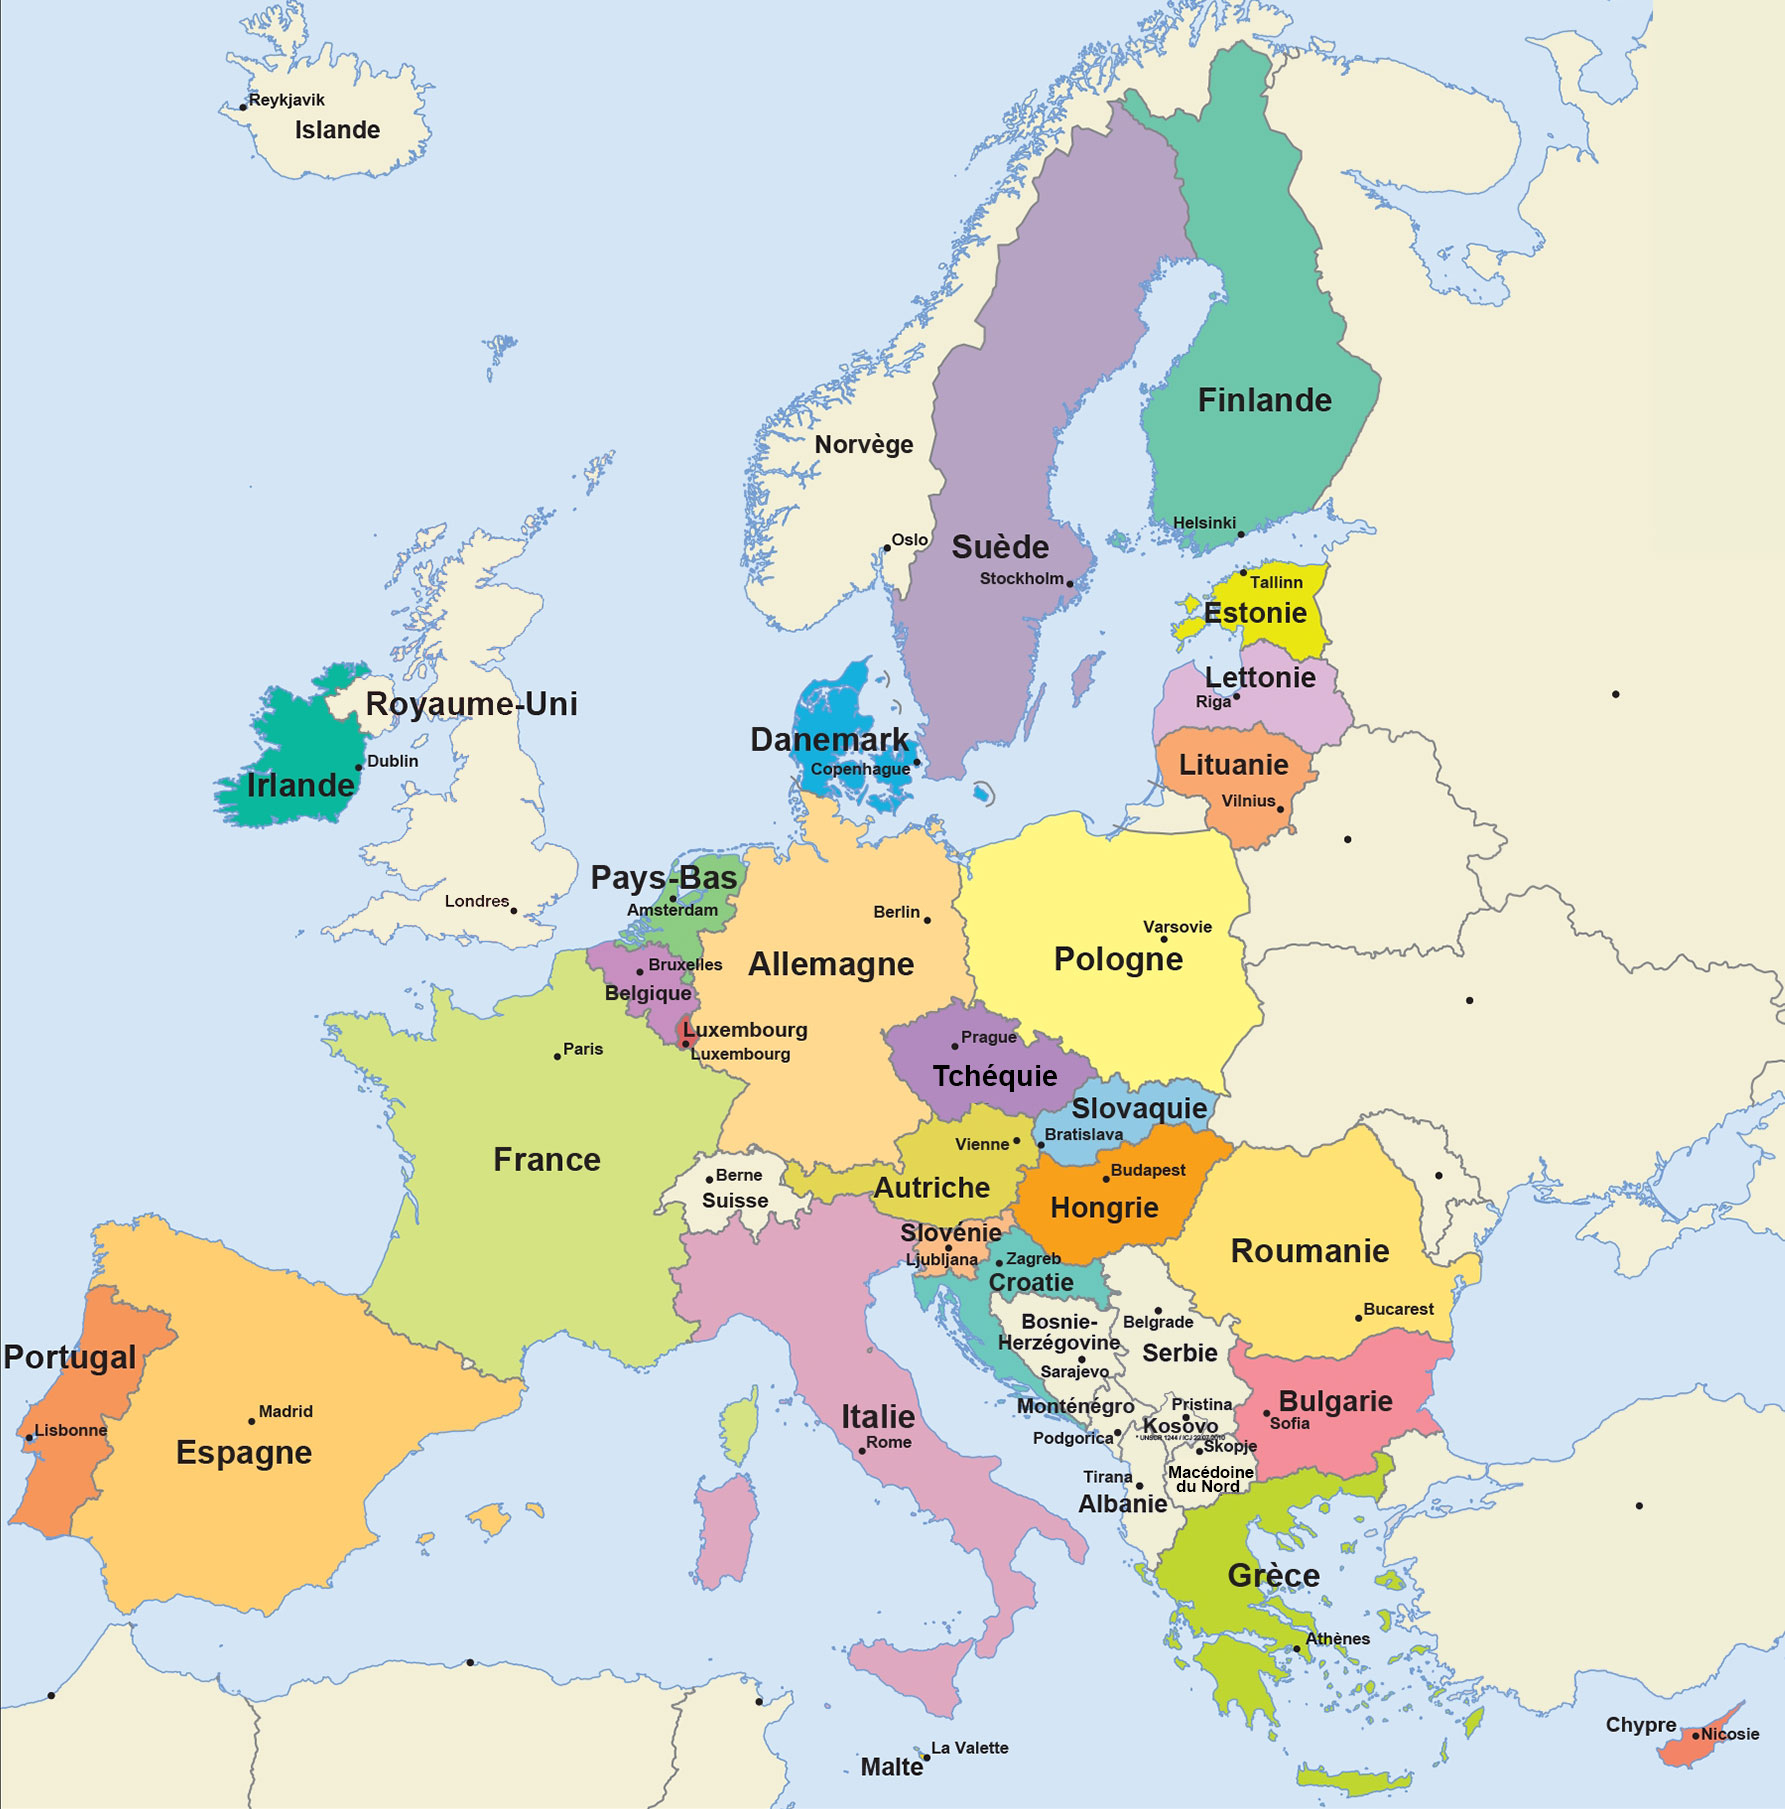 La Carte De L Union Européenne | Primanyc concernant Union Européenne Carte Vierge